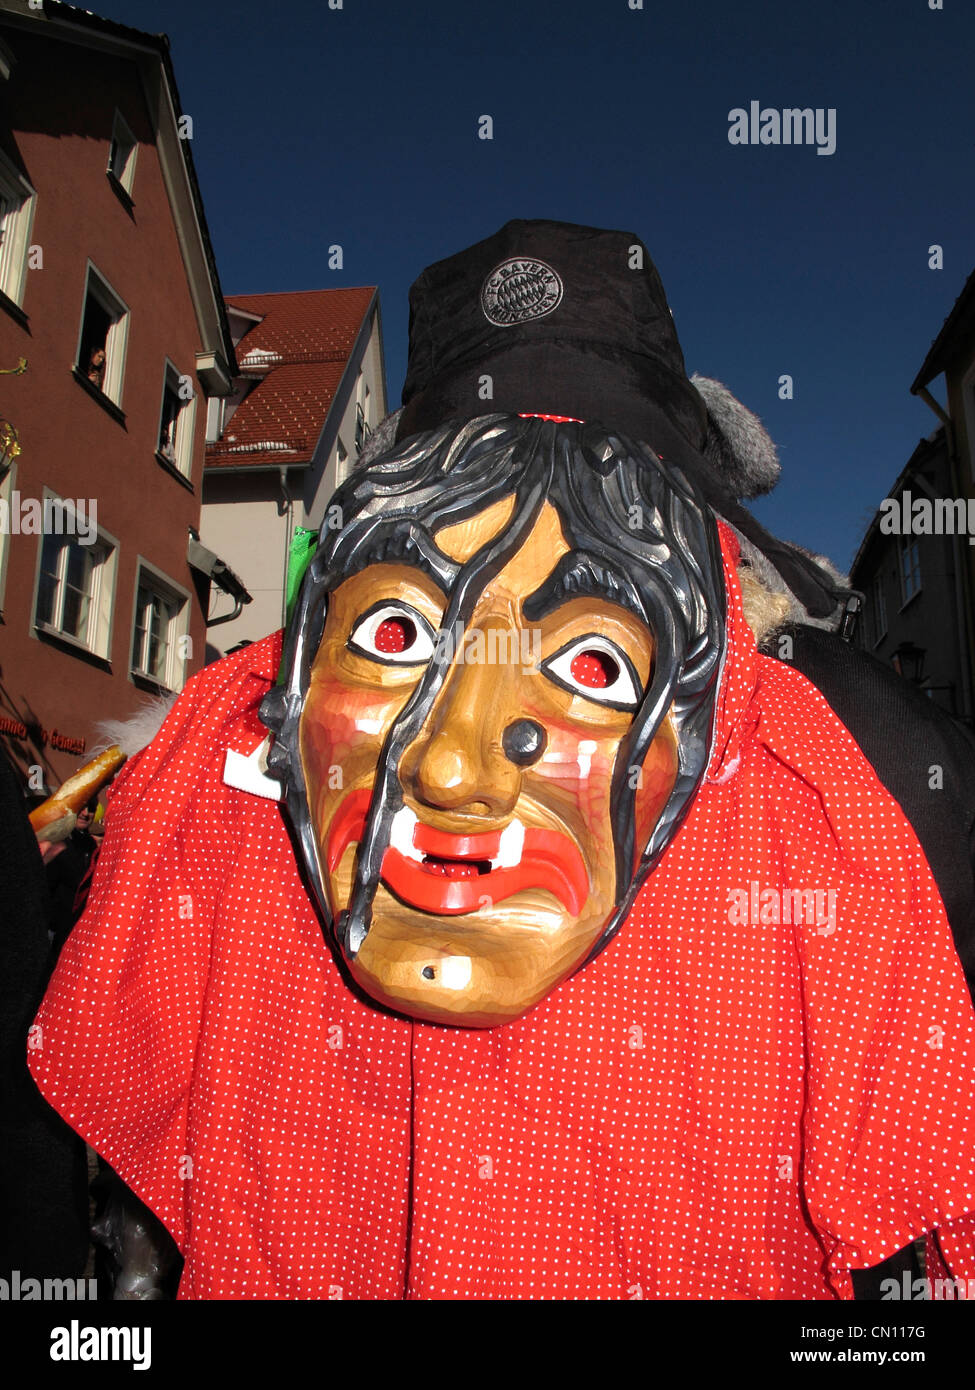 Germania Baviera Swabish Isny Martedì Grasso Carnevale Hexe maschera strega parade Foto Stock